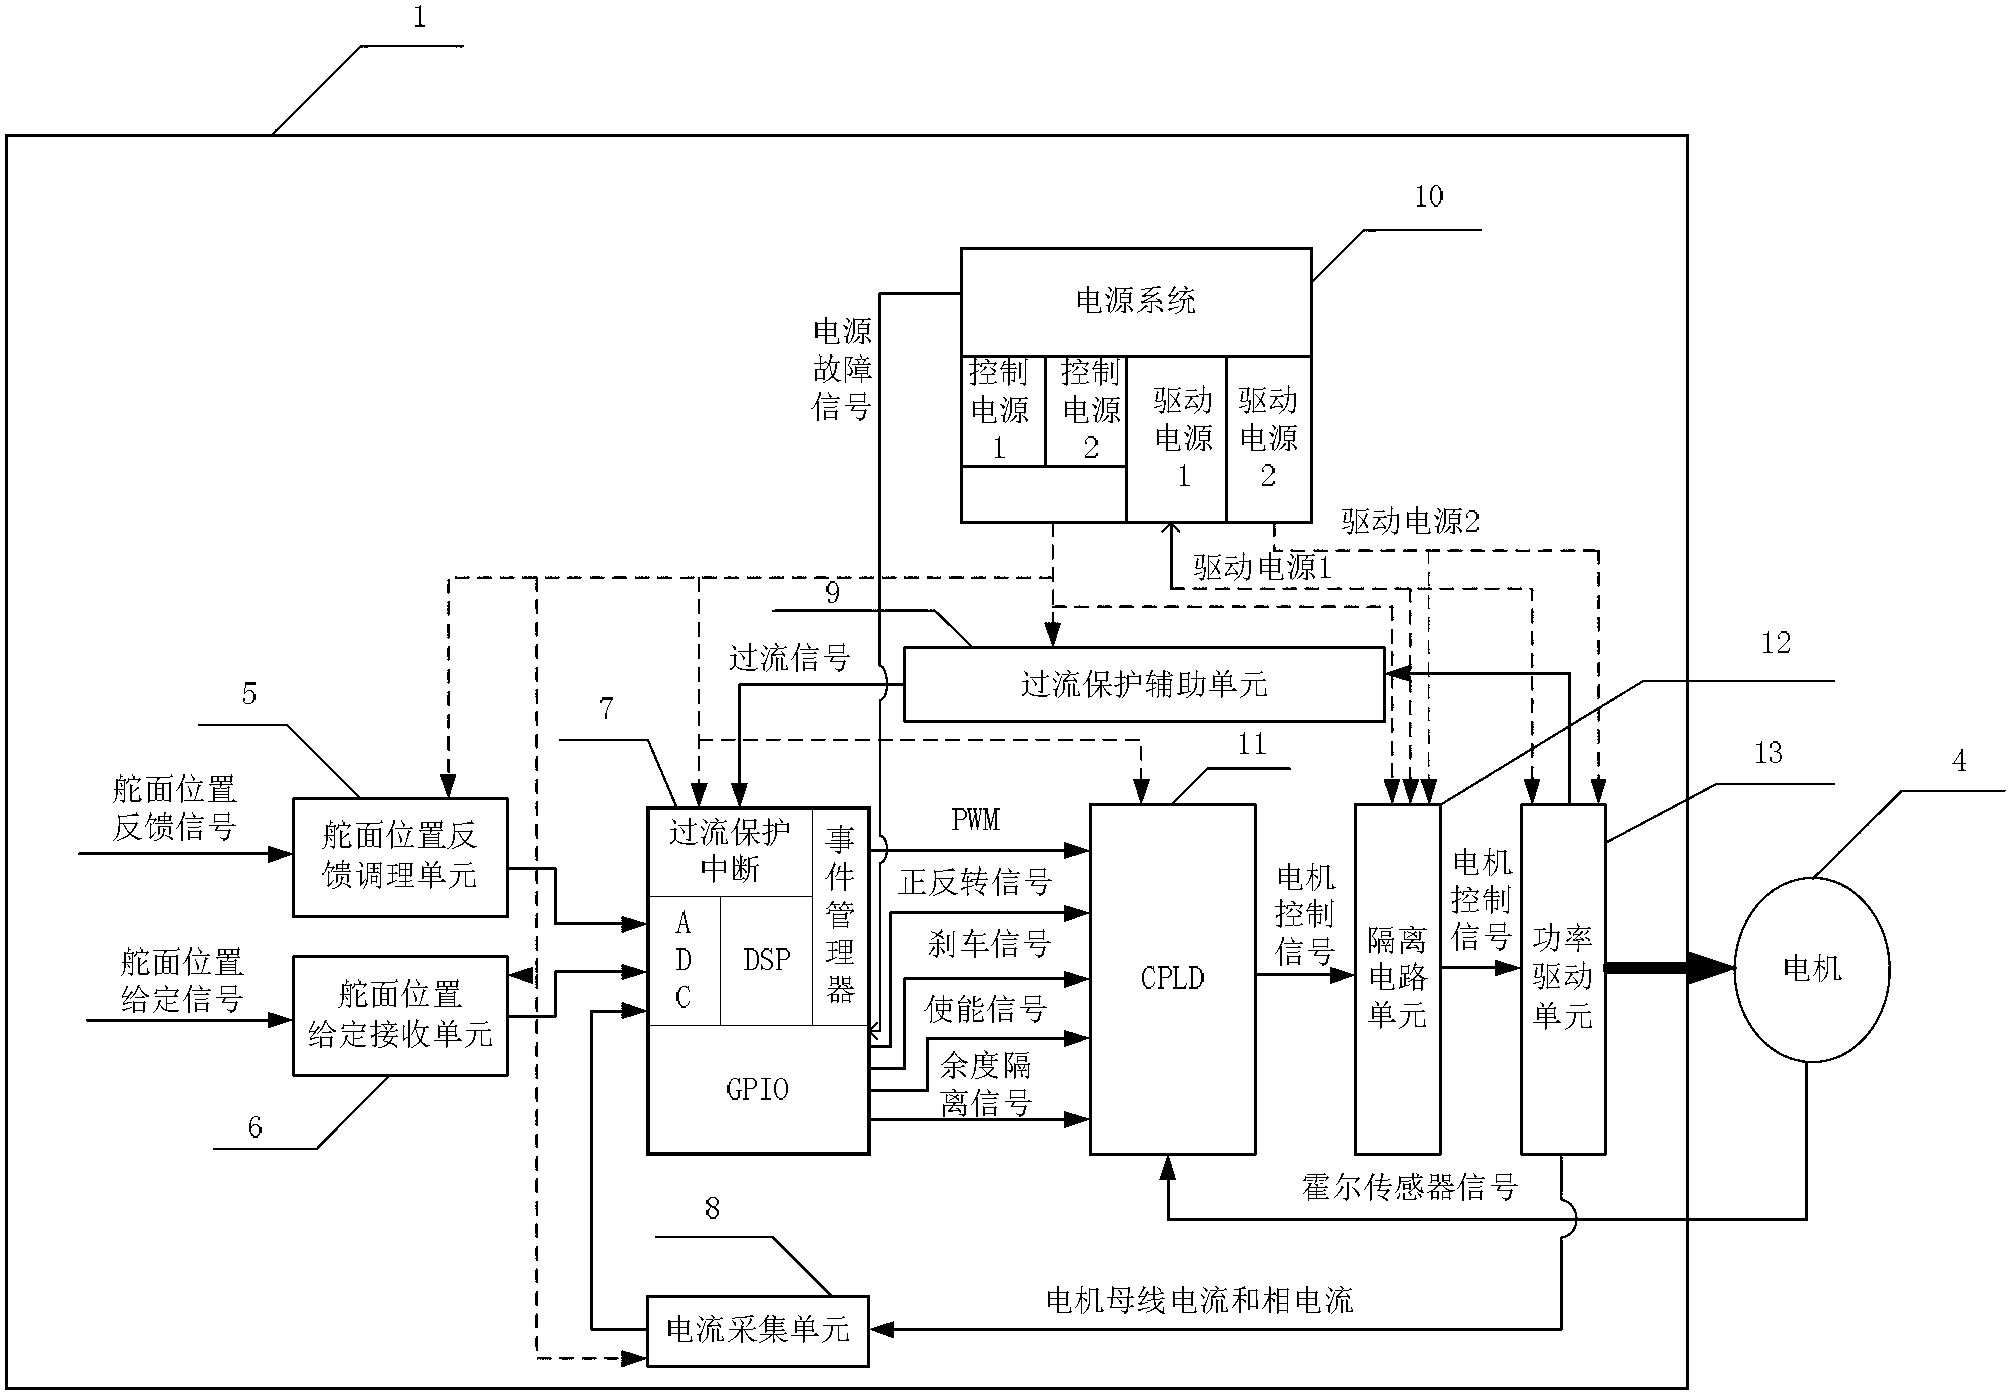 Dual-redundancy actuator system and control method